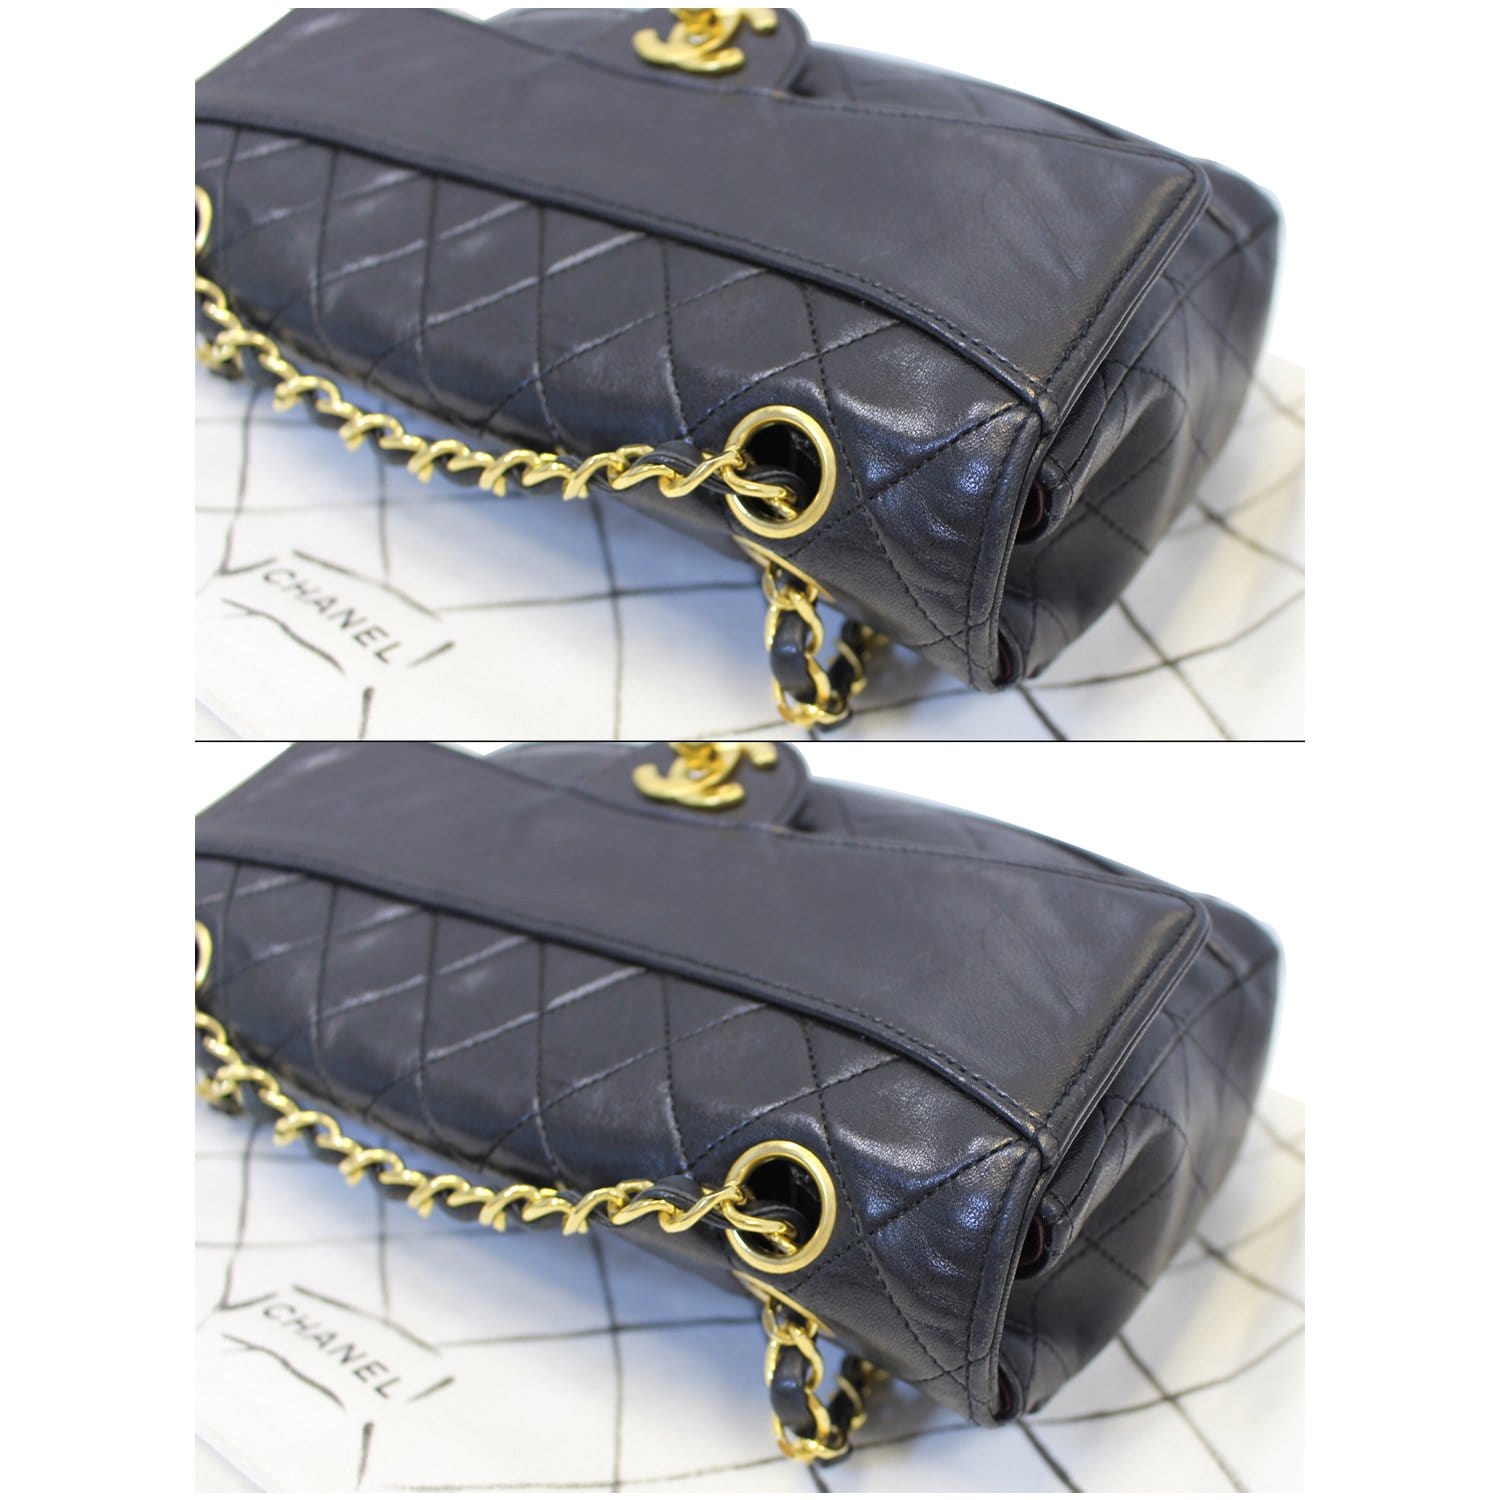 Black Chanel Lambskin Leather Handbag – Designer Revival